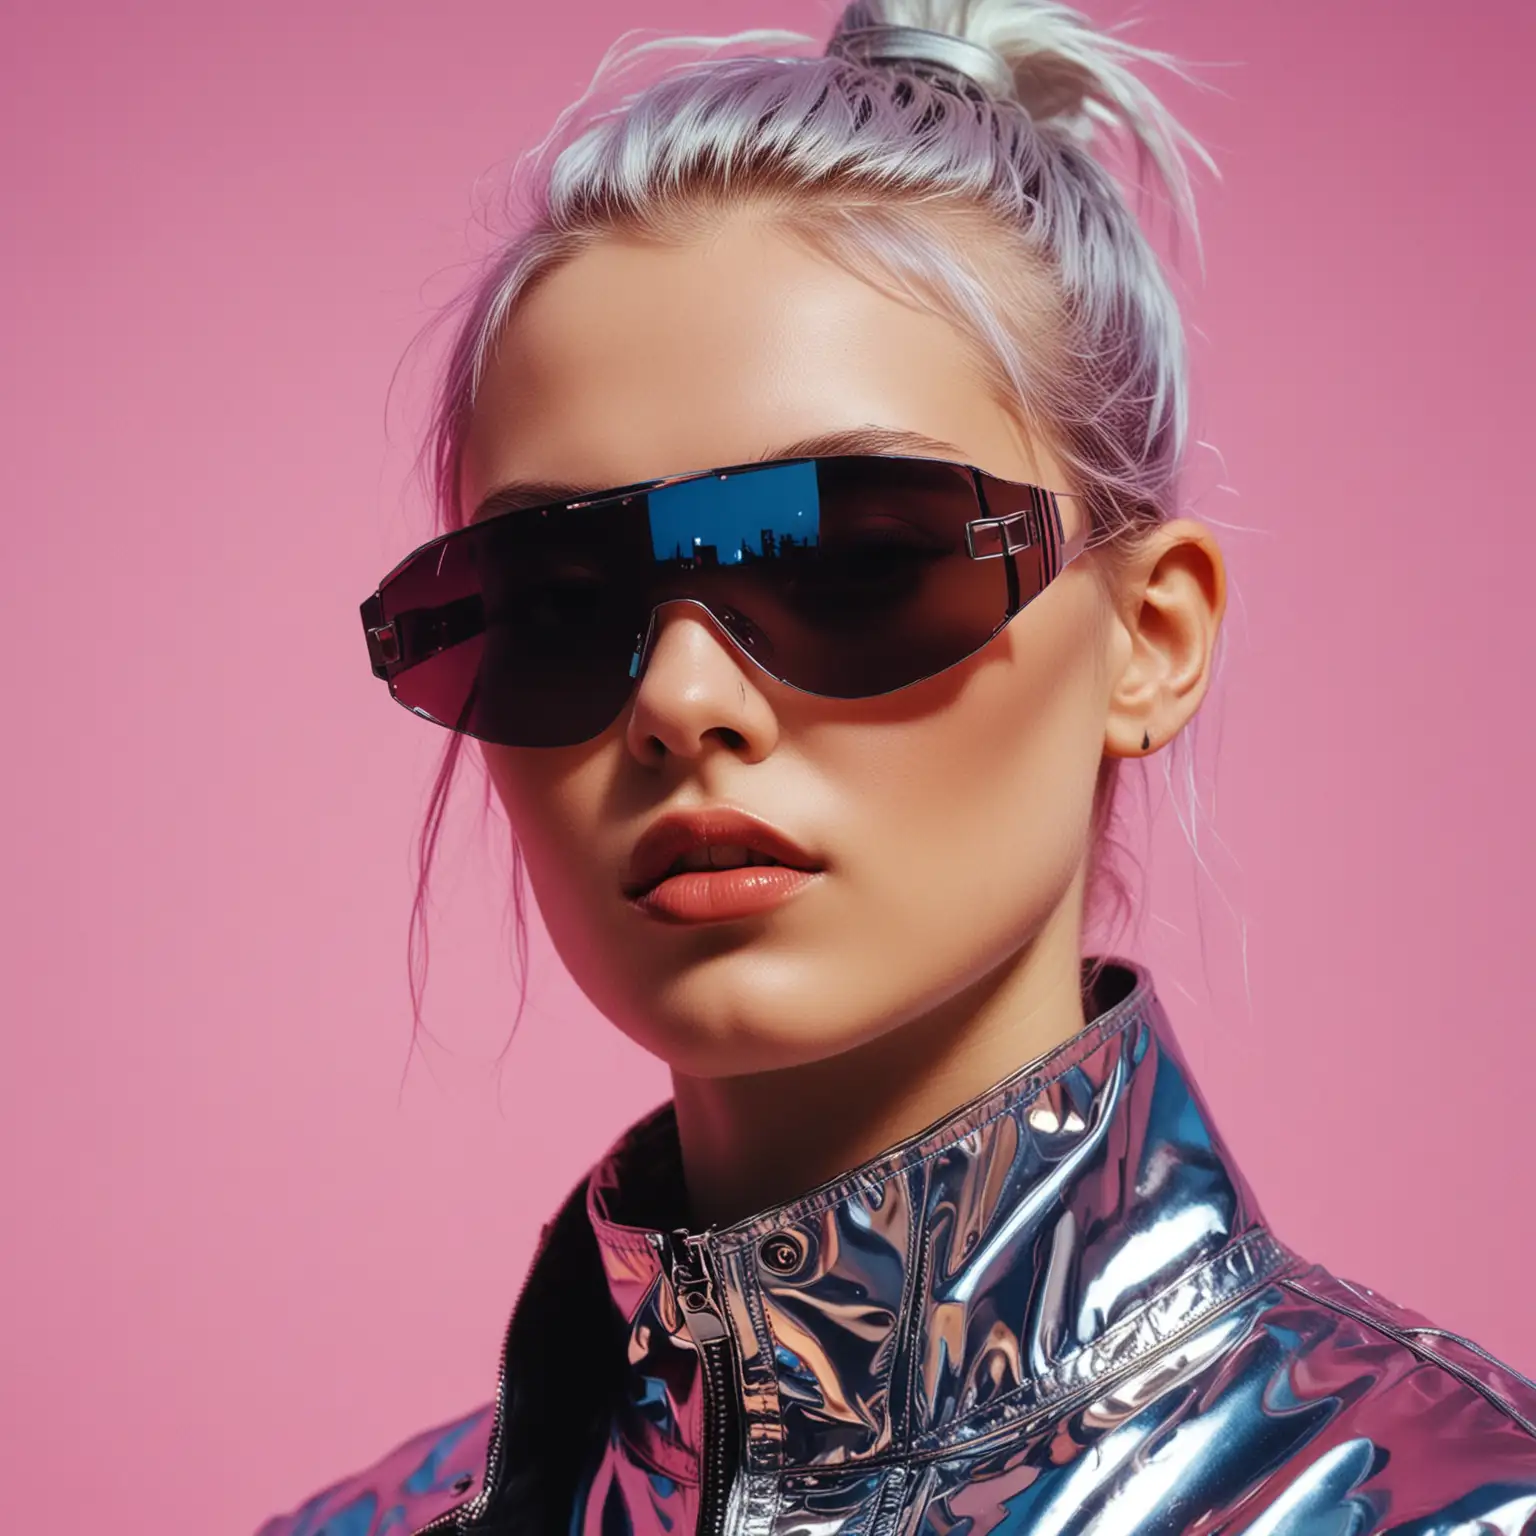 90's y2k fashion aesthetic cyberpunk, fashion photography, shot on film, grunge, noise effect, chrome wrap around sunglasses, colourful background, close up shot

